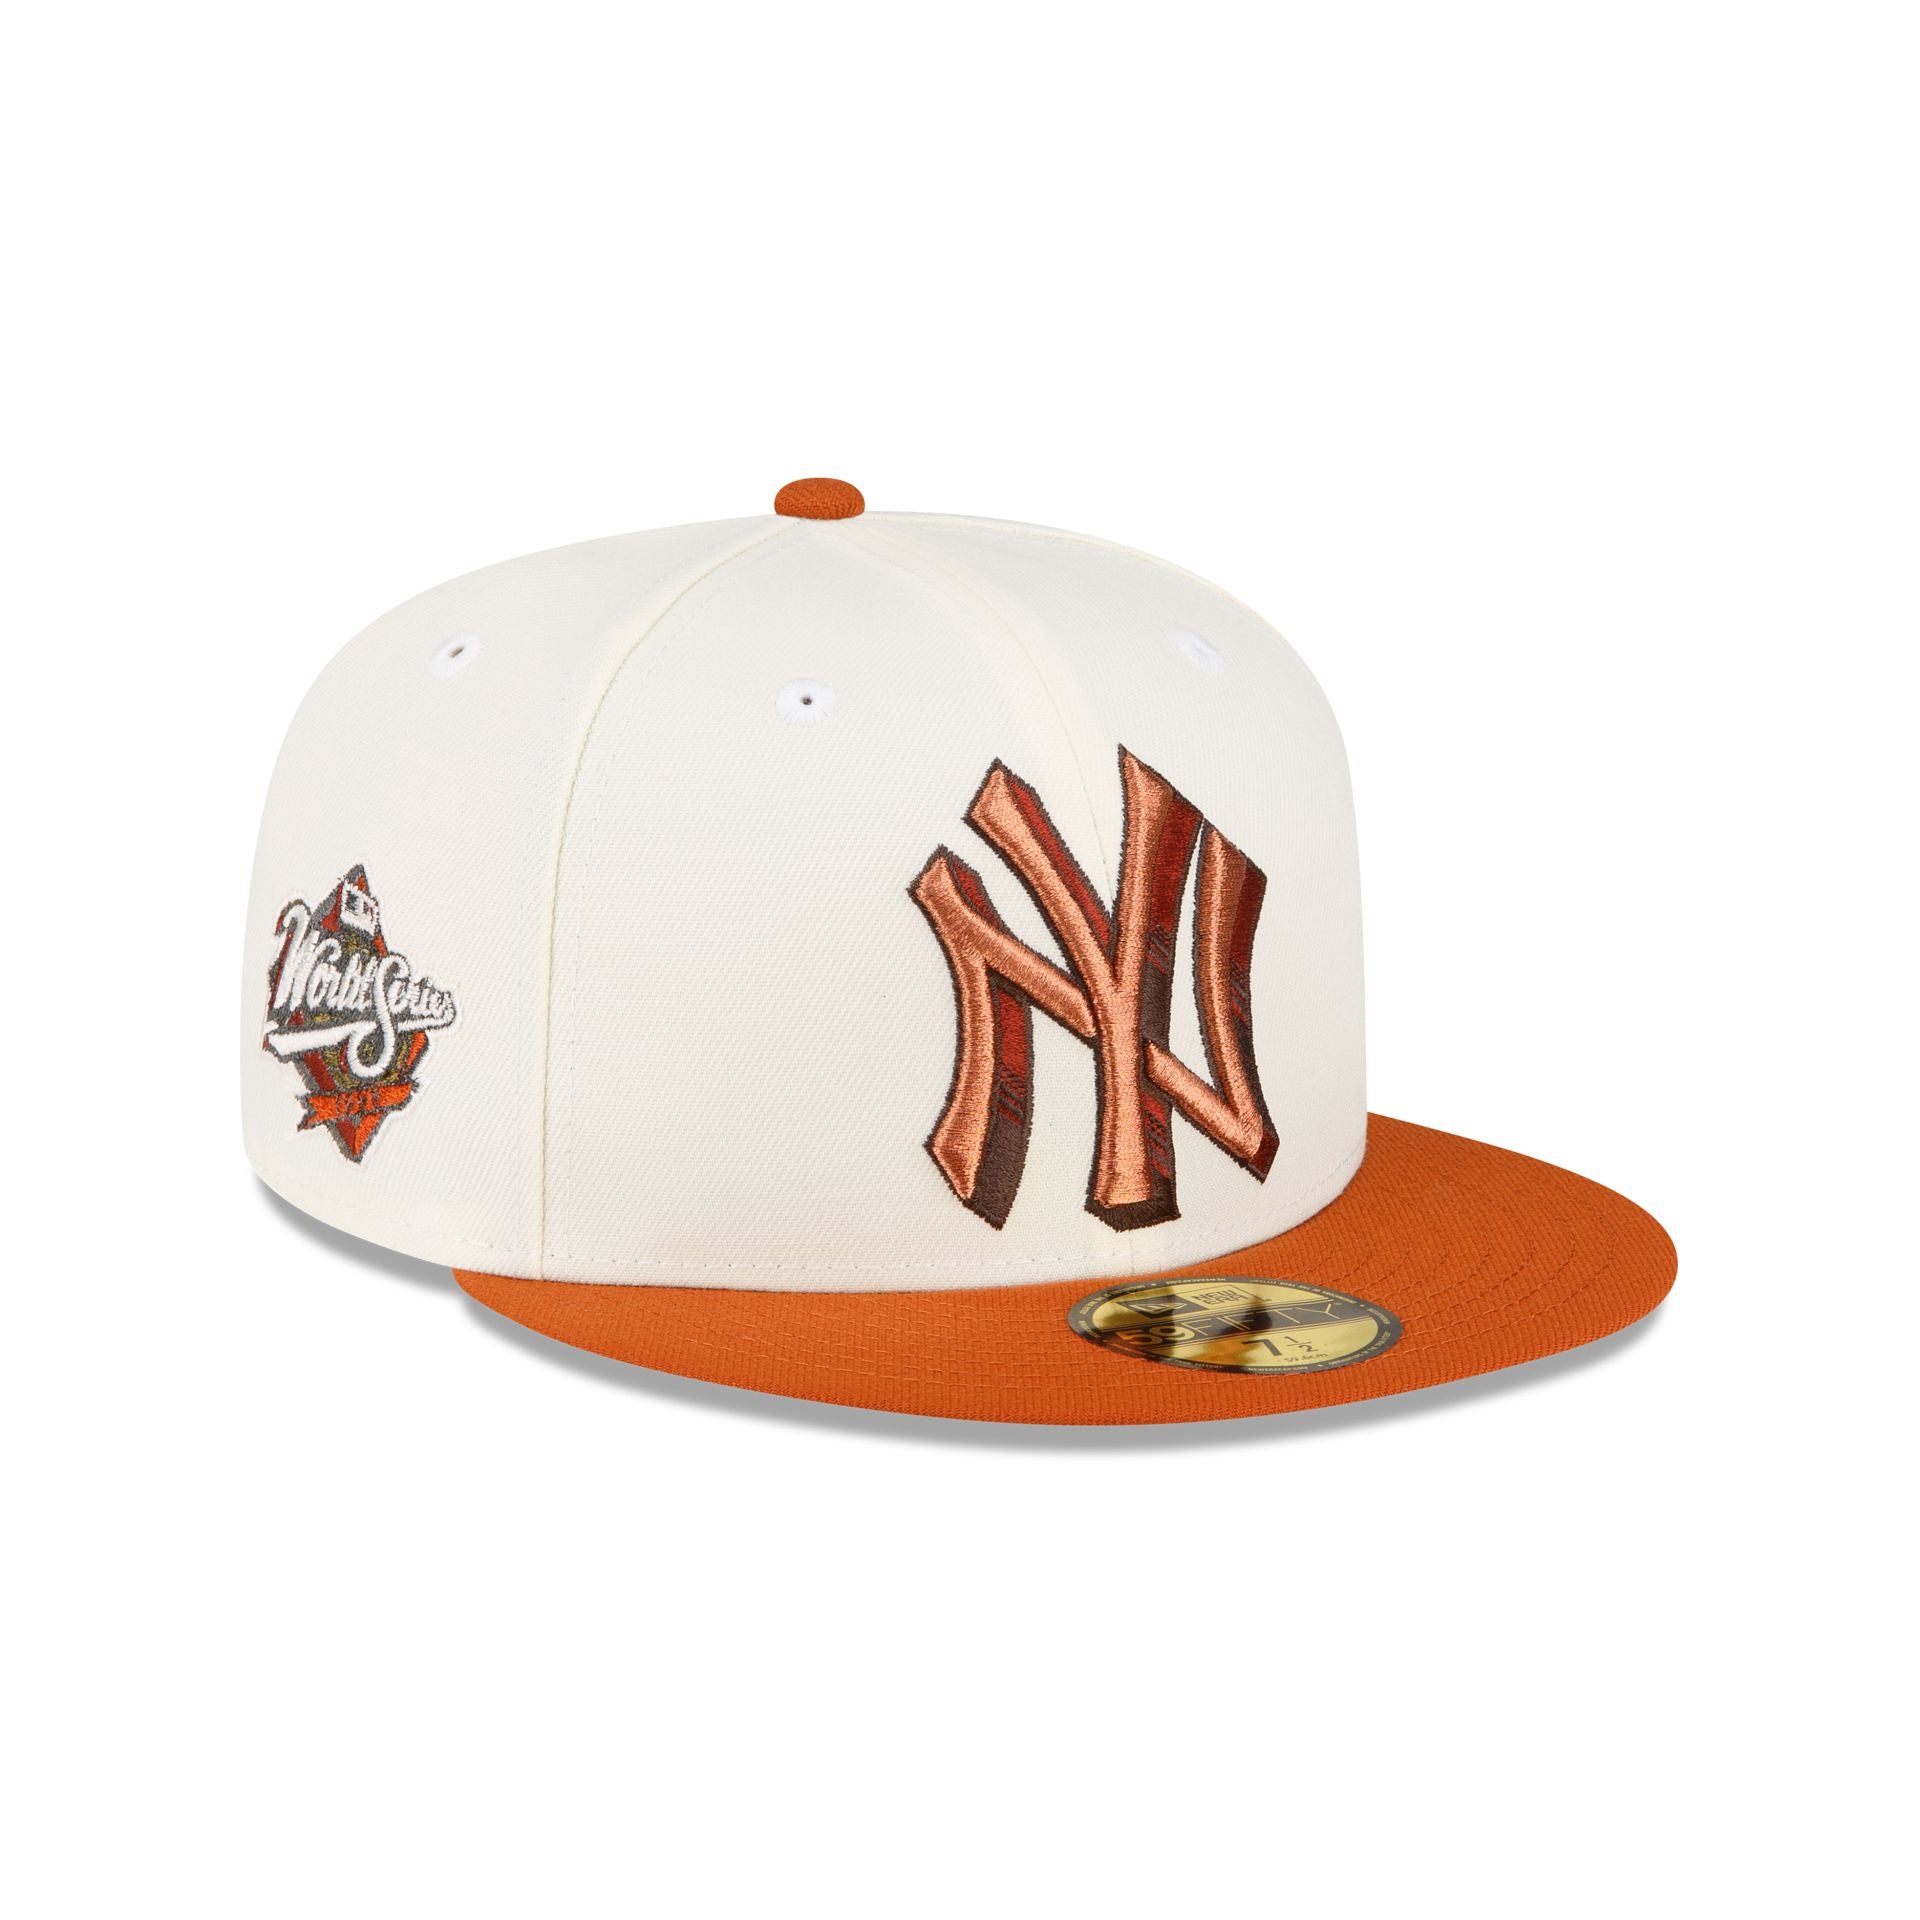 New Orange Just Era Caps Cap Fitted Hat – New Yankees Rust 59FIFTY York